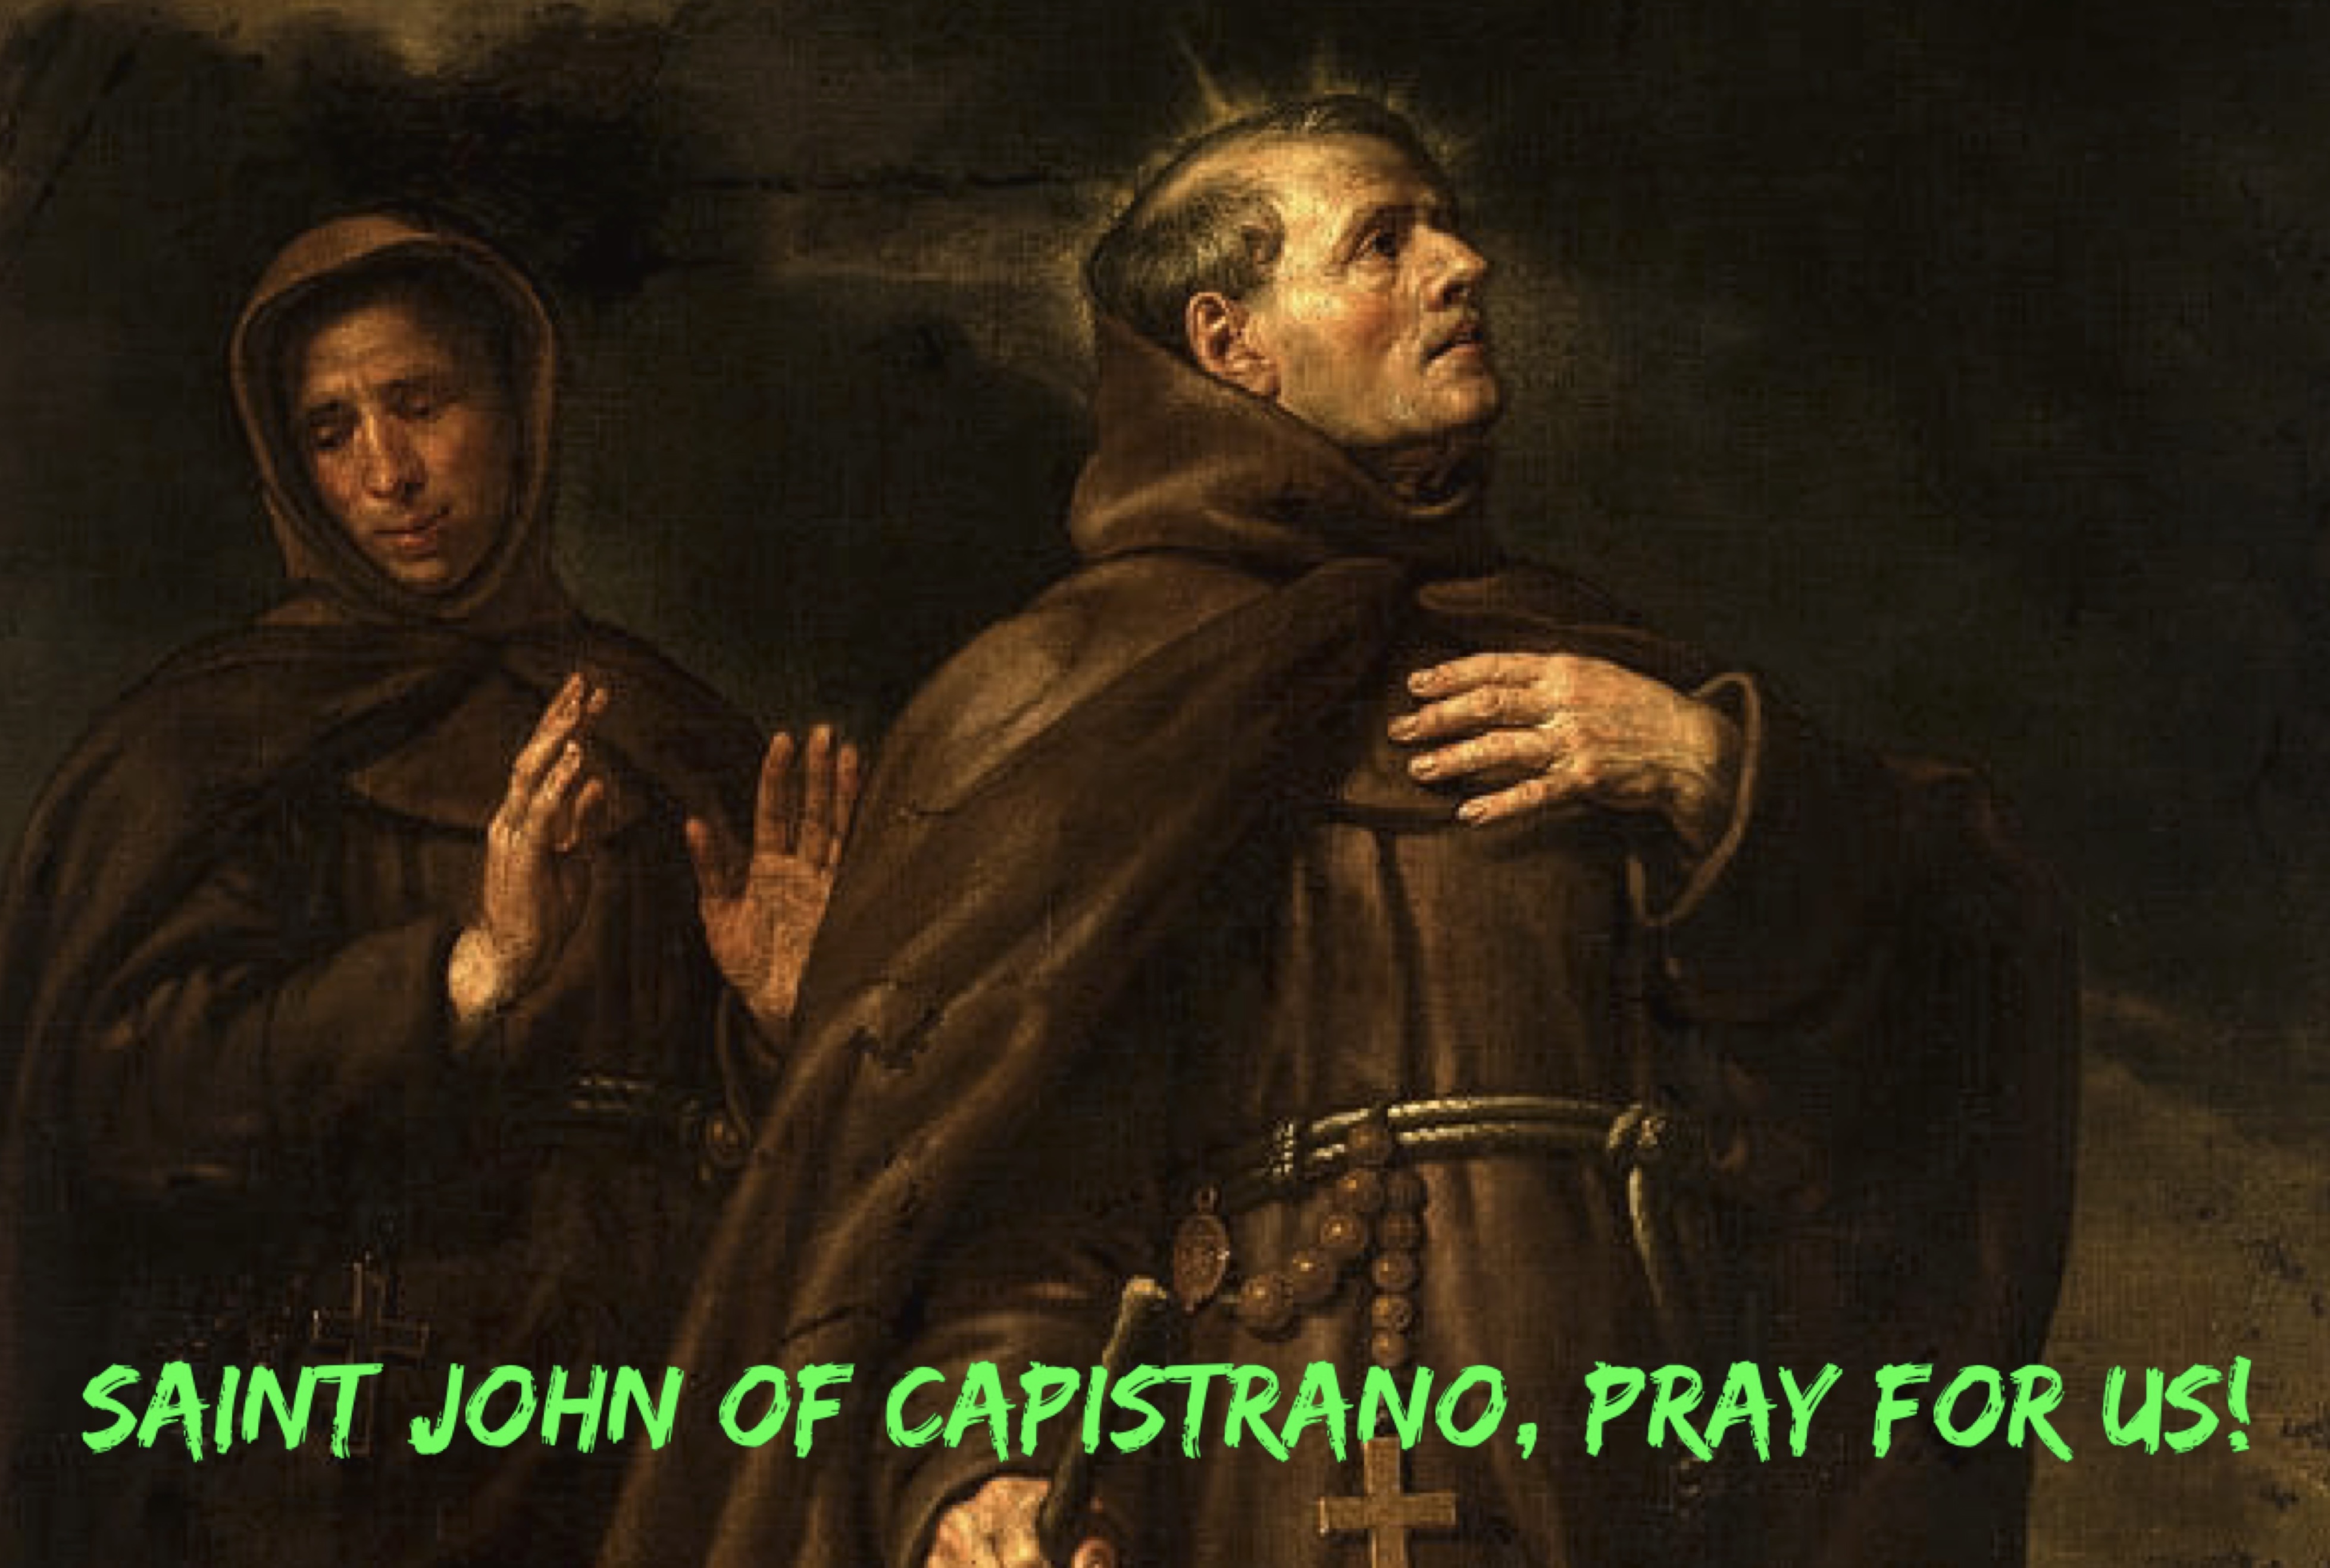 23rd October - Saint John of Capistrano